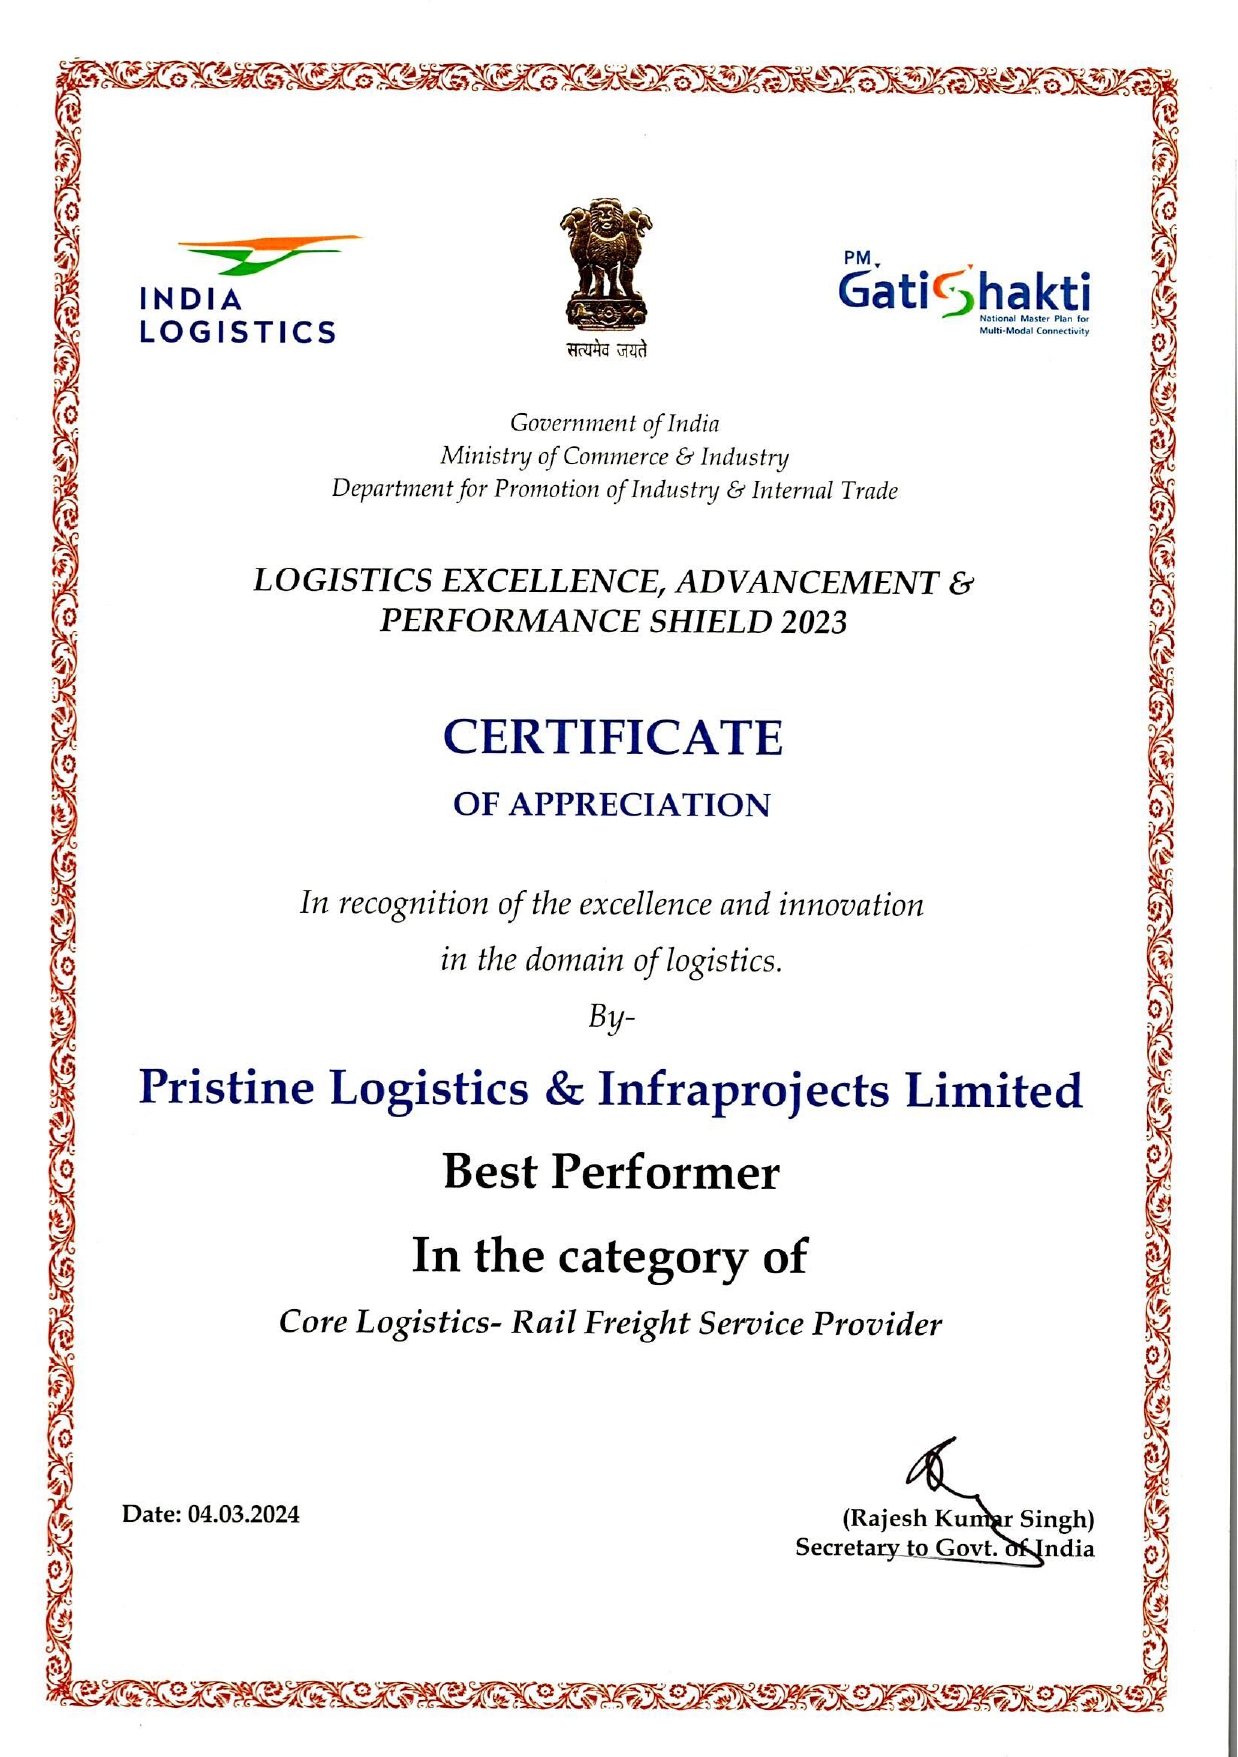 Northern India Multimodal Logistics Award-2023